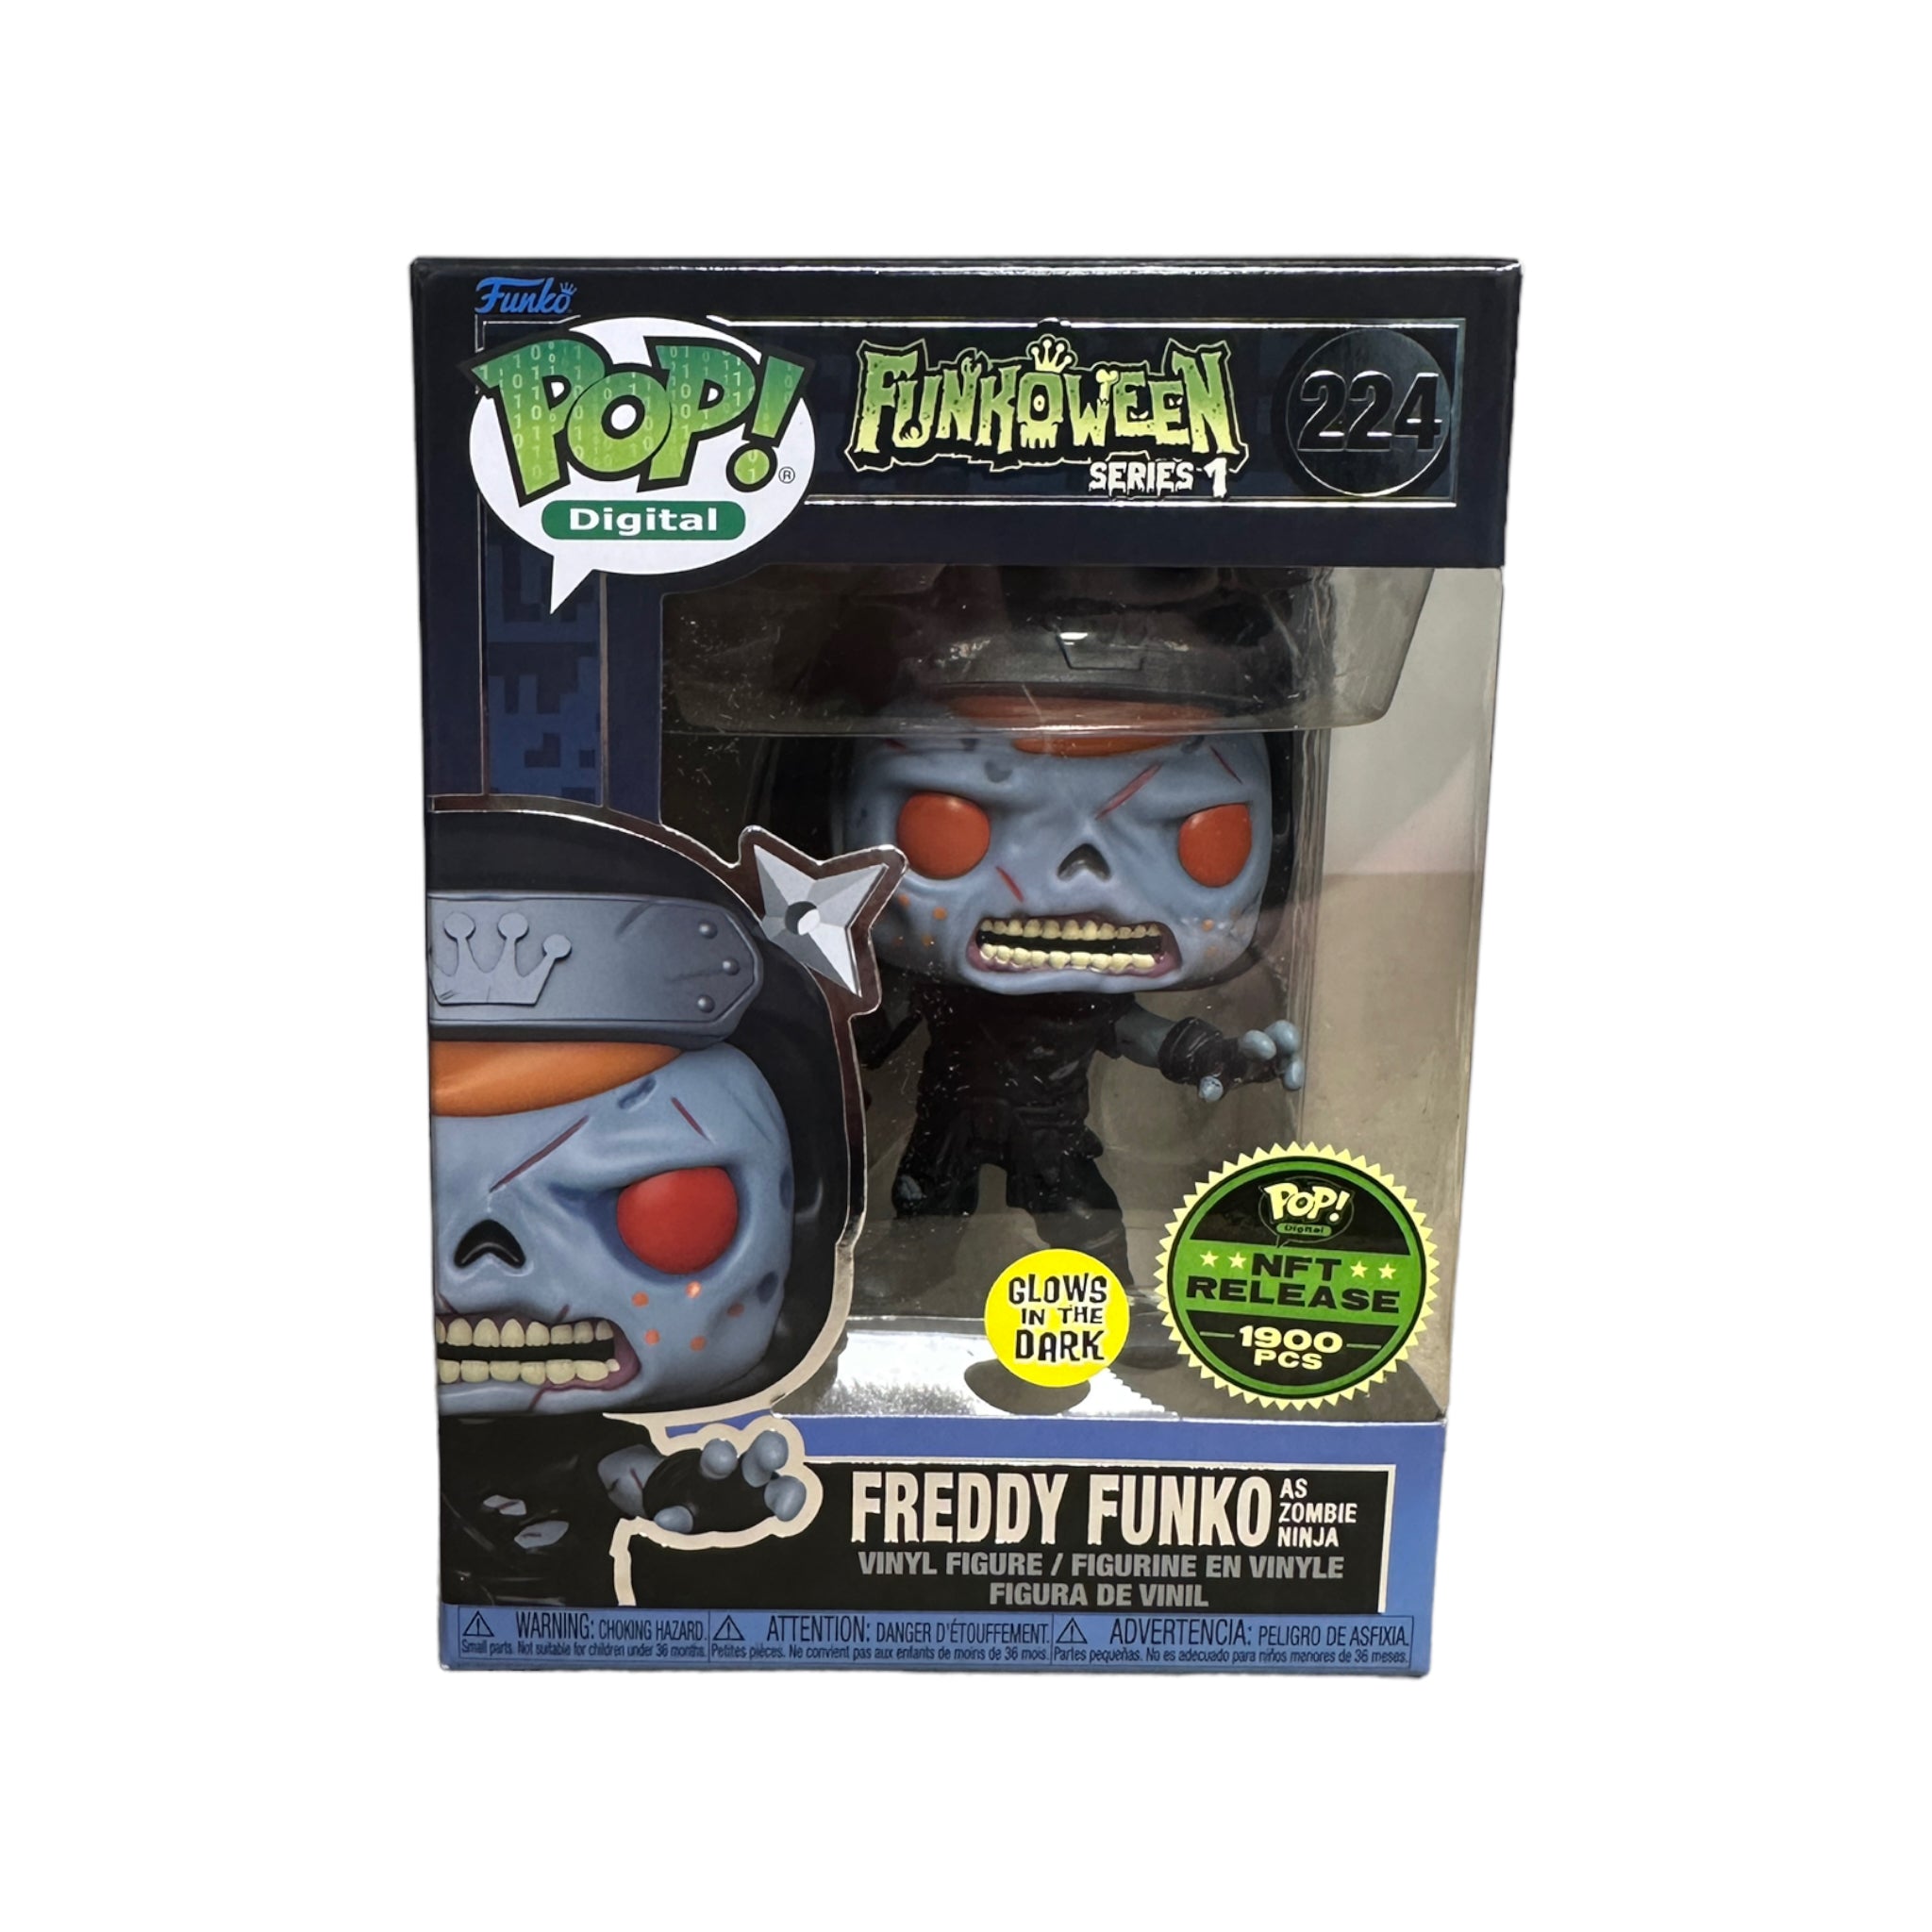 Freddy Funko as Zombie Ninja #224 (Glows in the Dark) Funko Pop! - Funkoween Series 1 - NFT Release Exclusive LE1900 Pcs - Condition 8.75/10